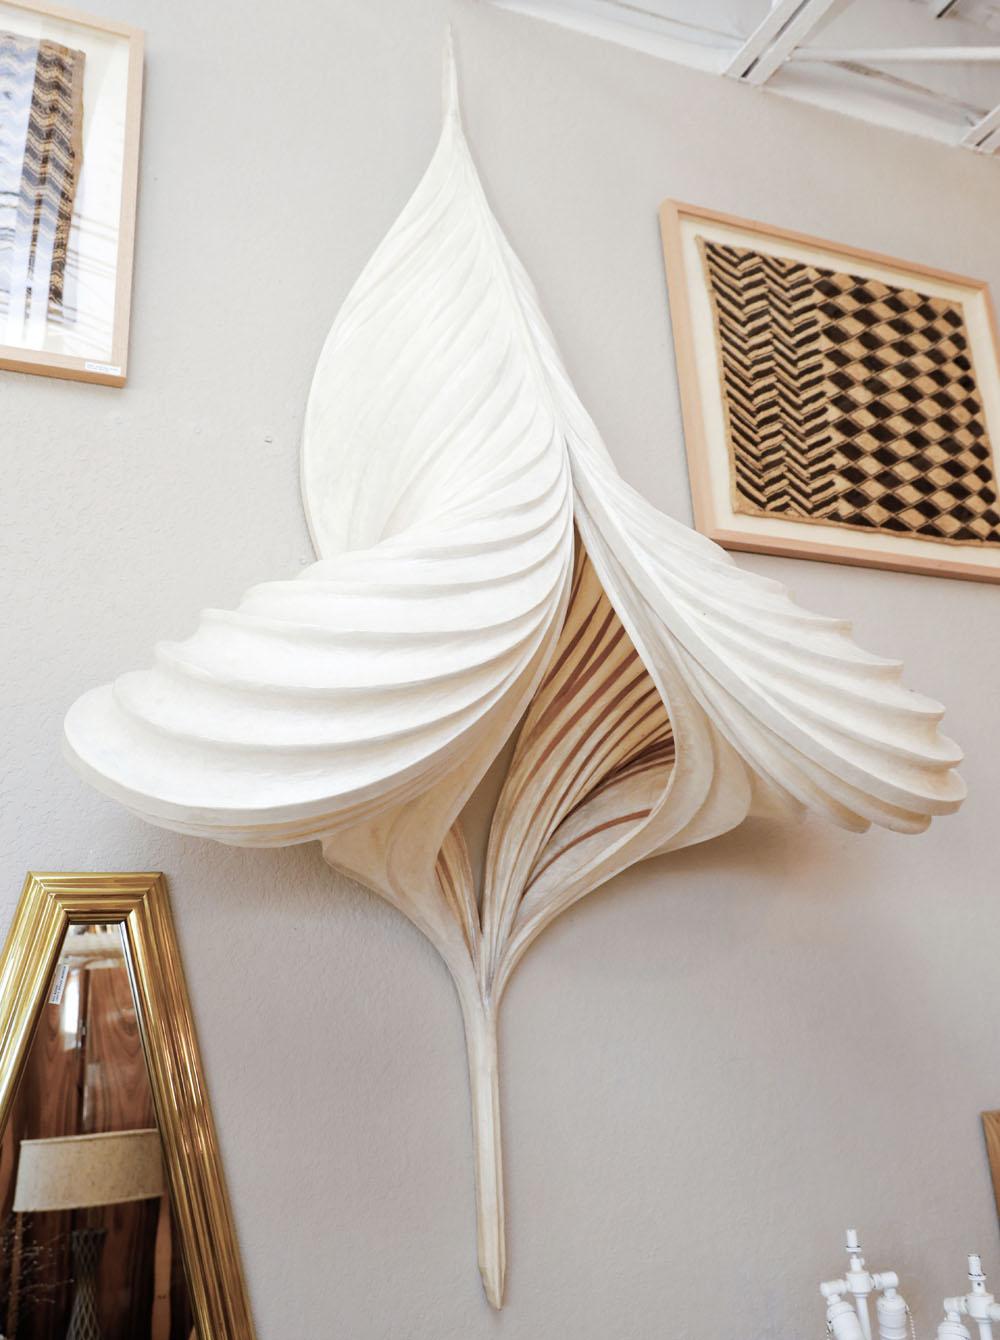 Organic Modern Giant Organic Shaped Paper Lantern Wall Sconce